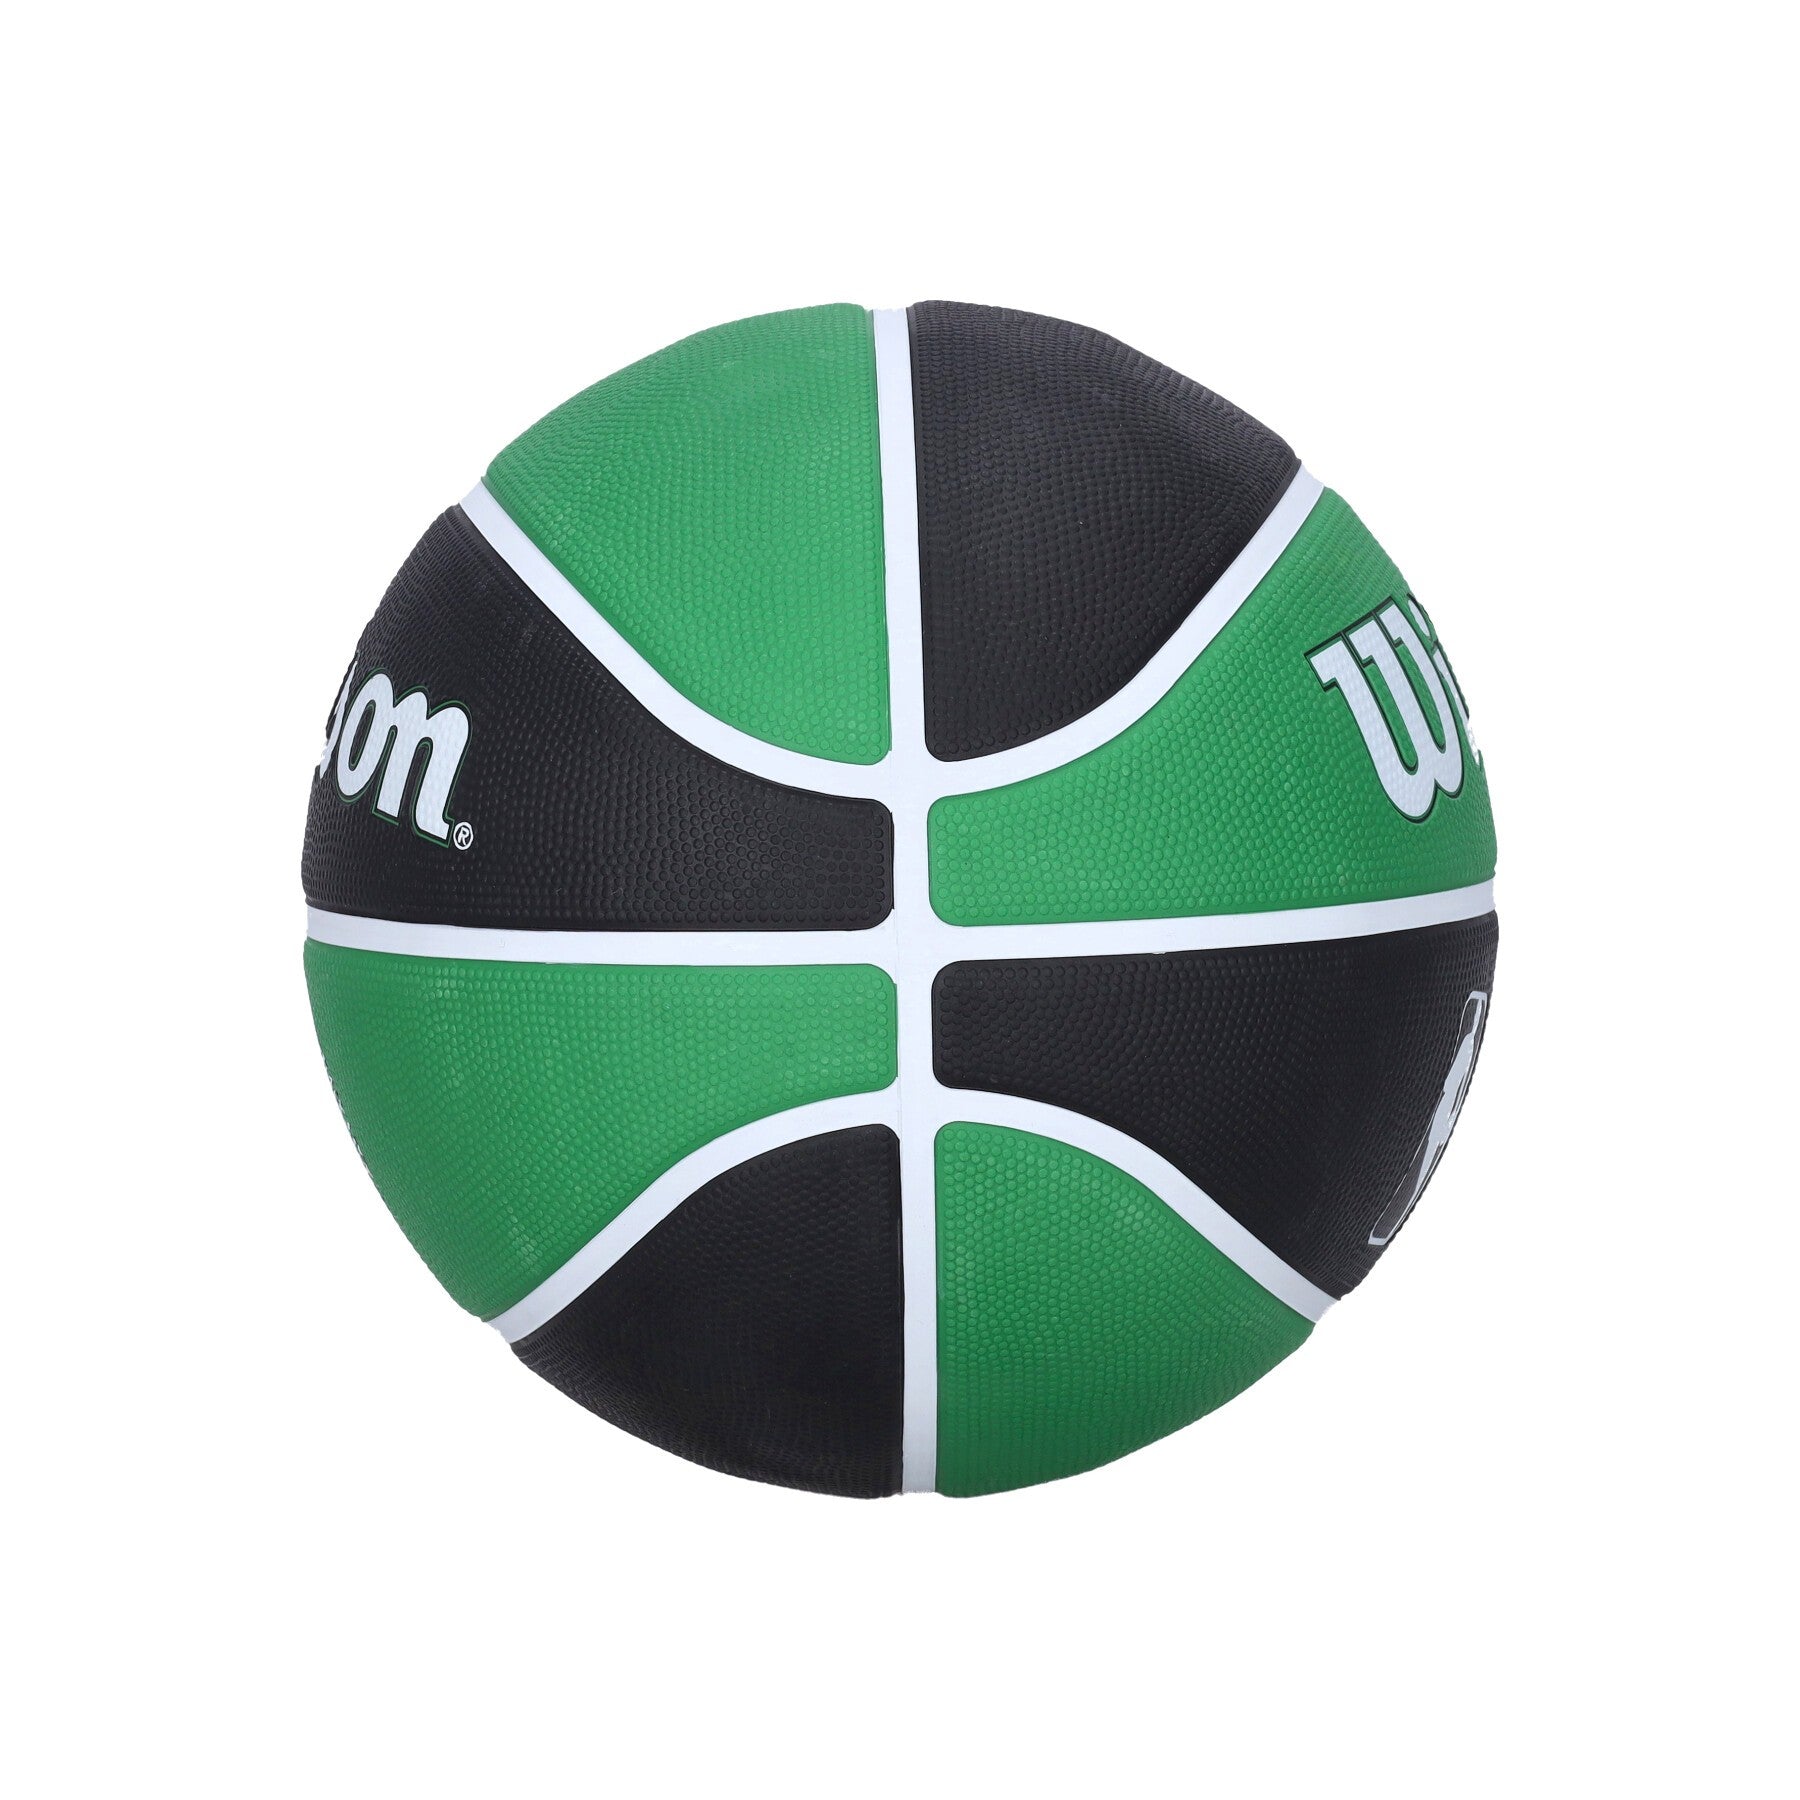 Pallone Uomo Nba Team Tribute Basketball Size 7 Boscel Original Team Colors